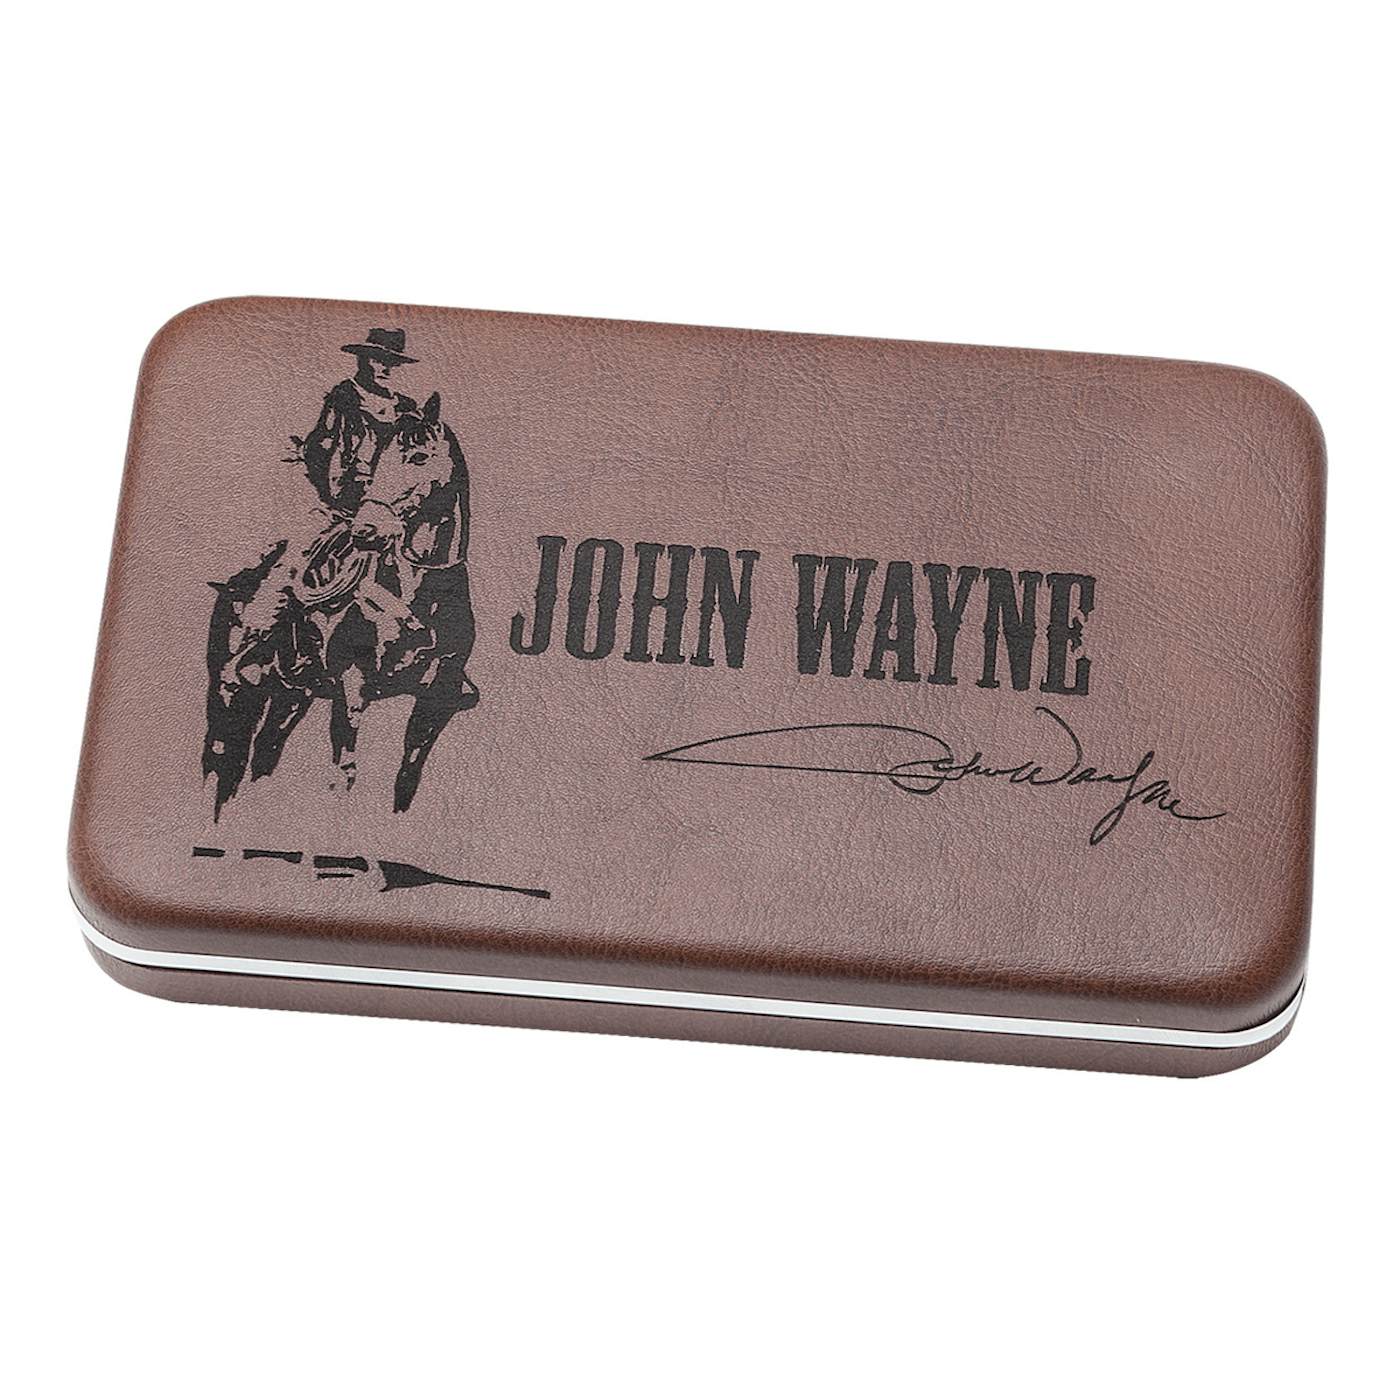 John Wayne Trapper Gift Set